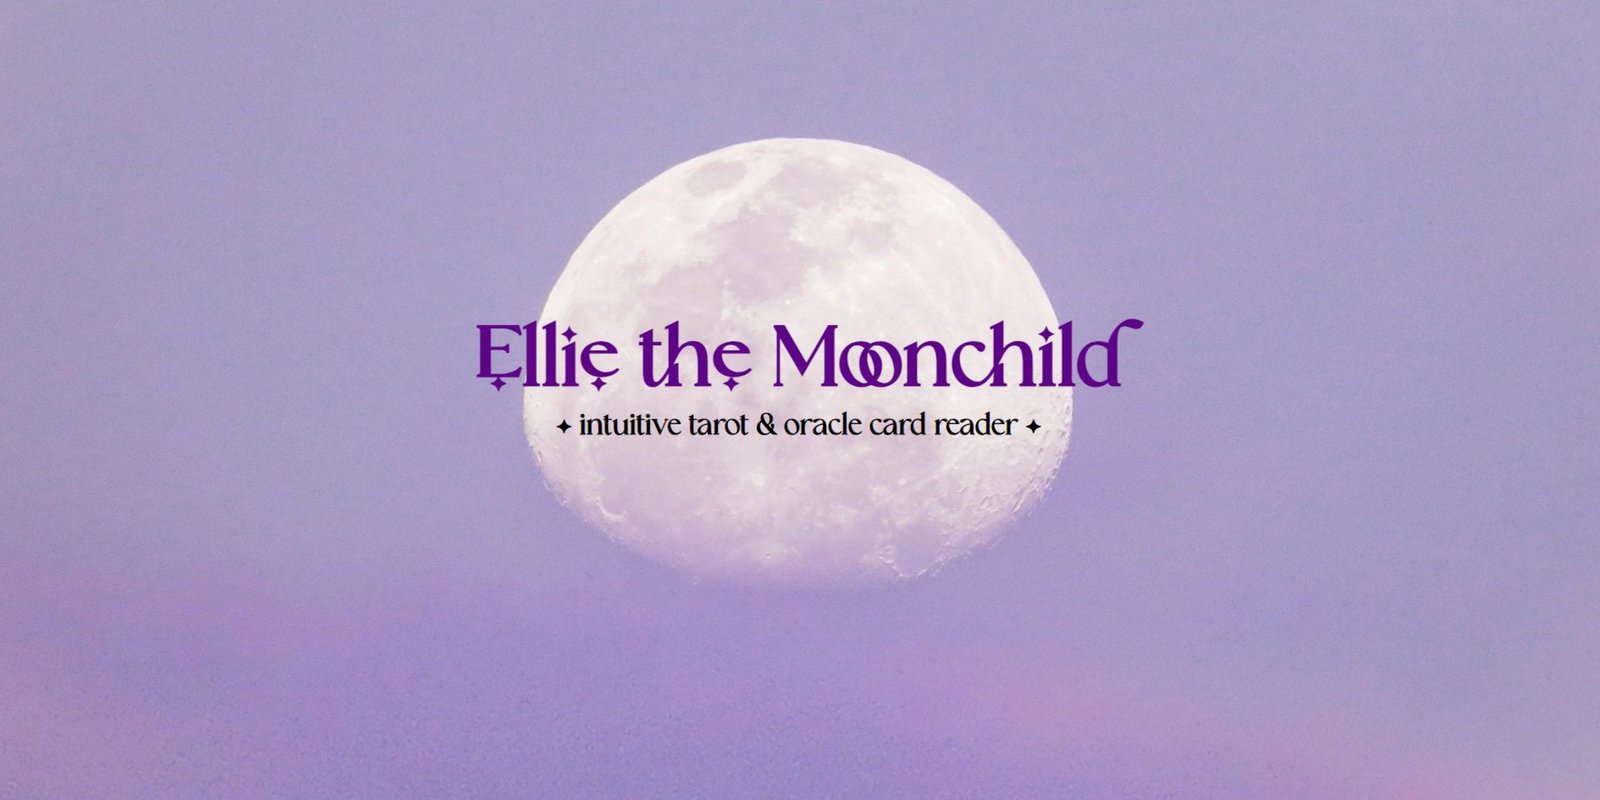 Ellie the Moonchild cover photo